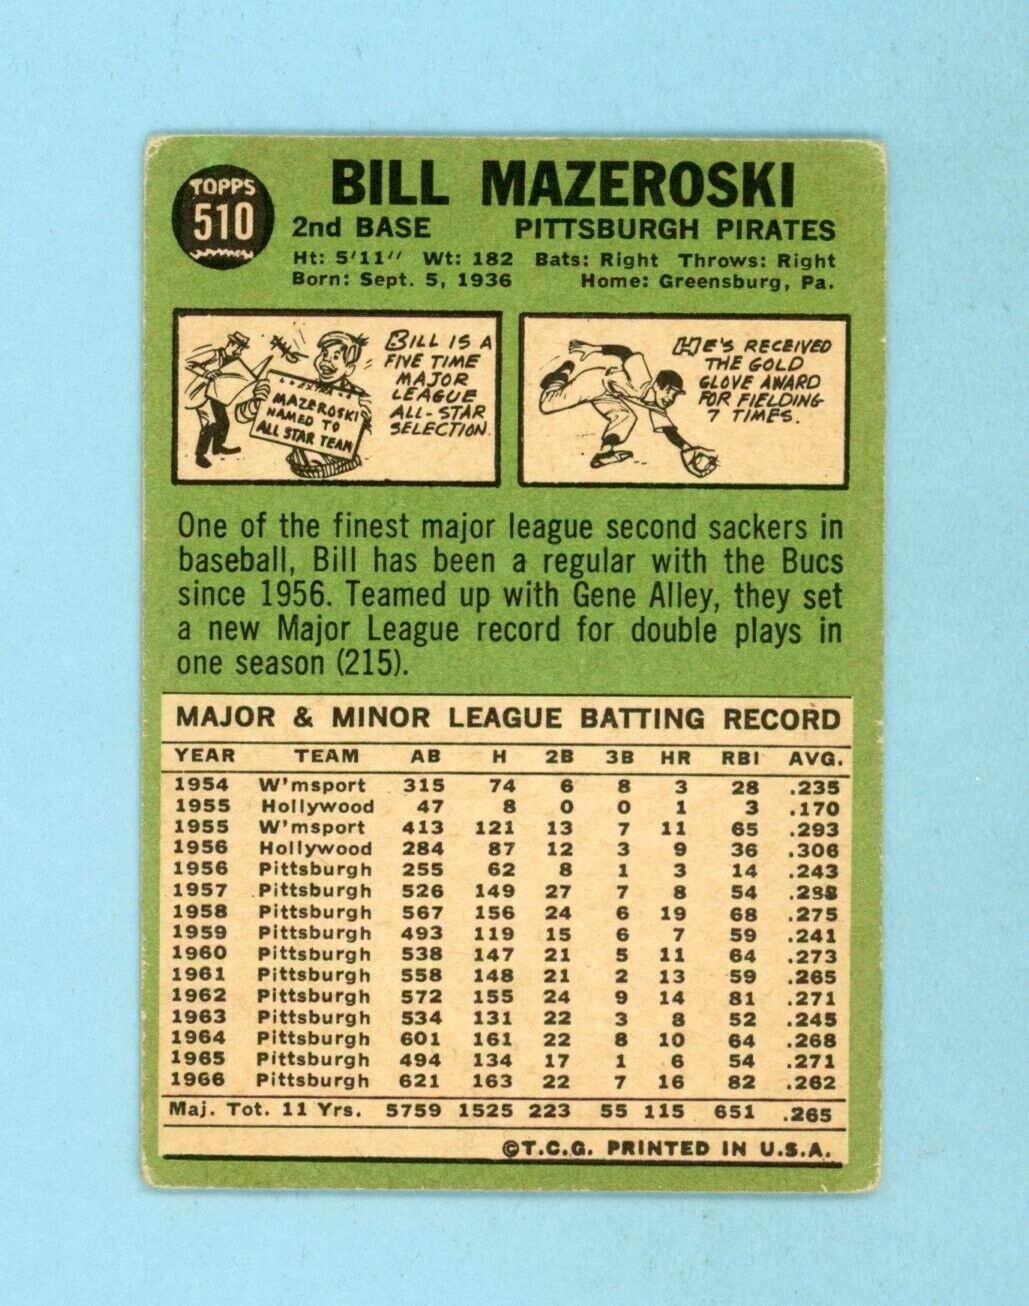 1967 Topps #510 Bill Mazeroski Pittsburgh Pirates Baseball Card Low Grade